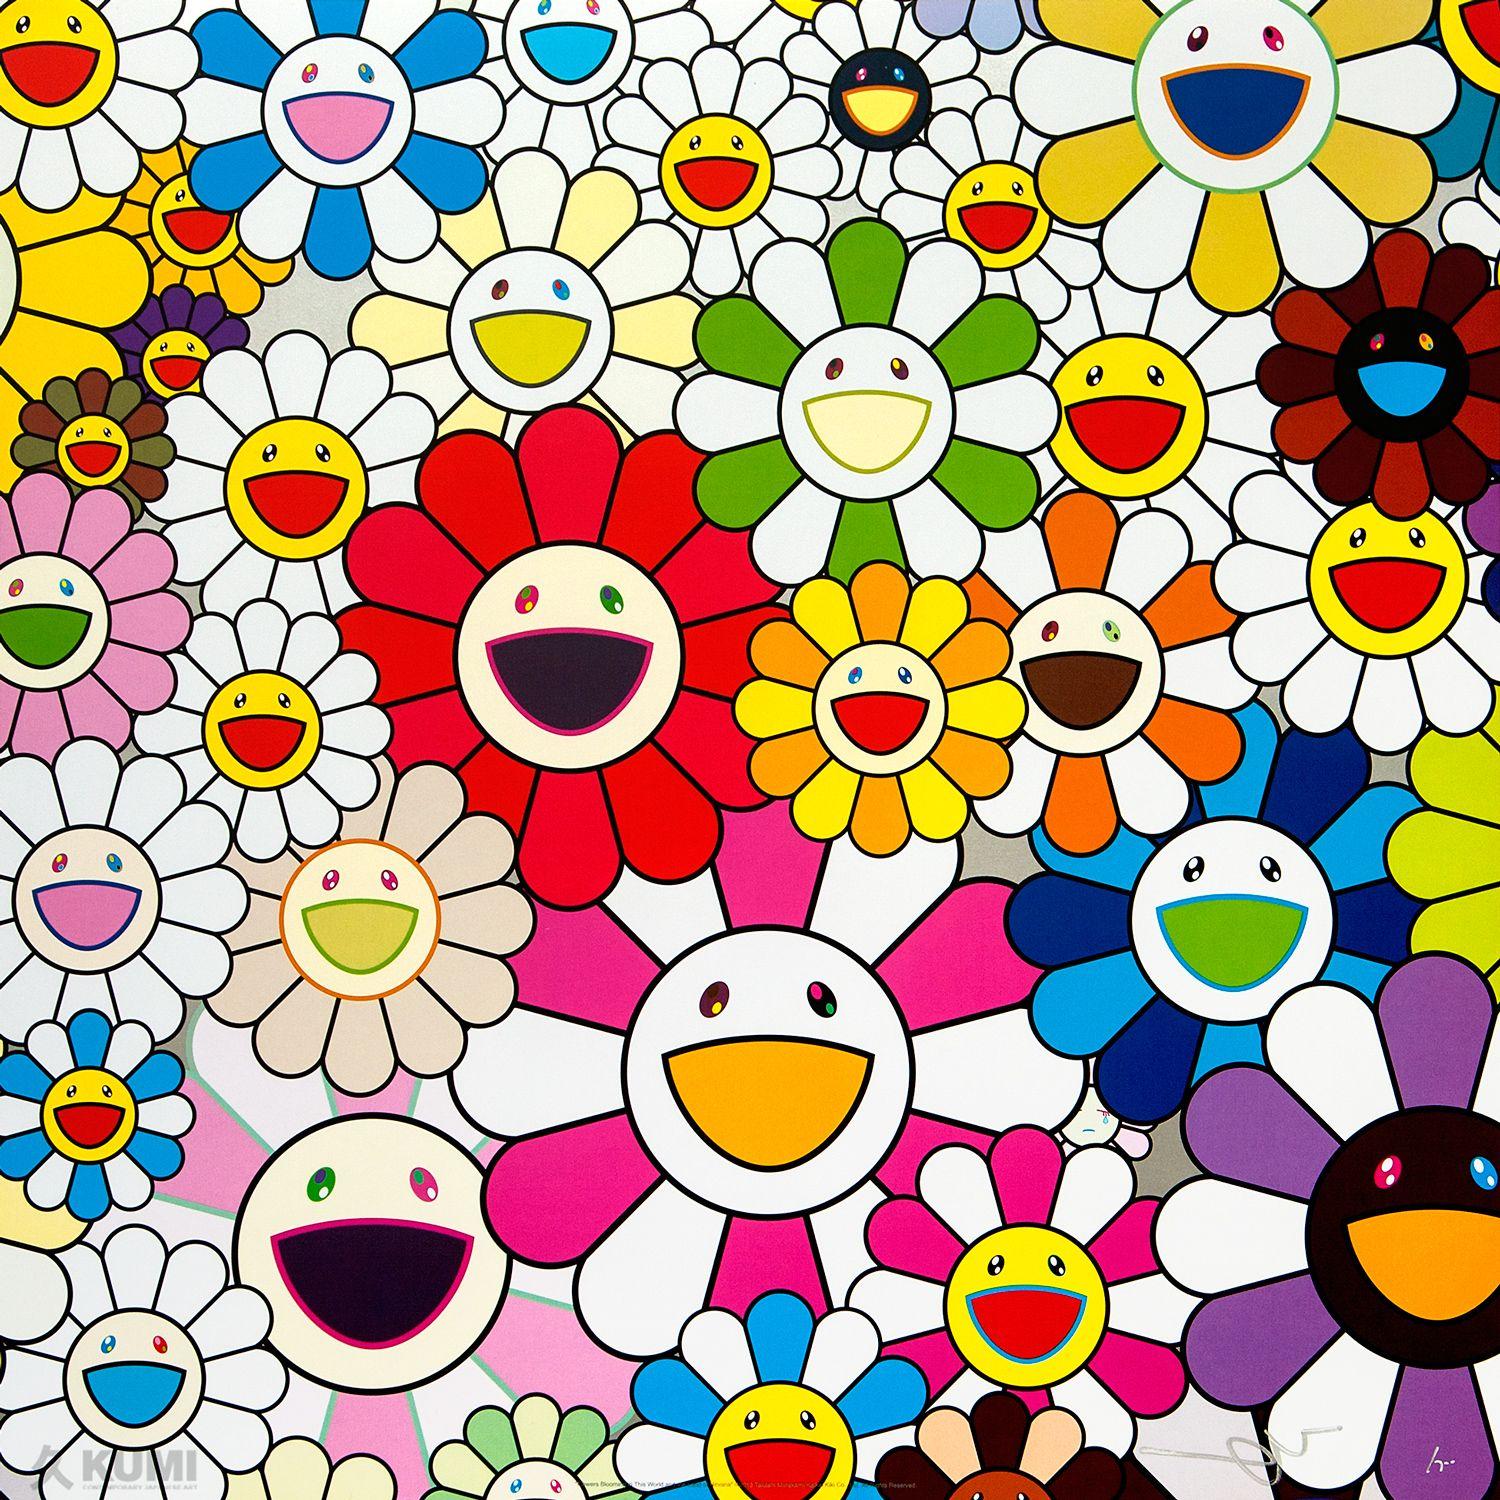 Takashi Murakami Flower Wallpapers - Top Free Takashi Murakami Flower ...